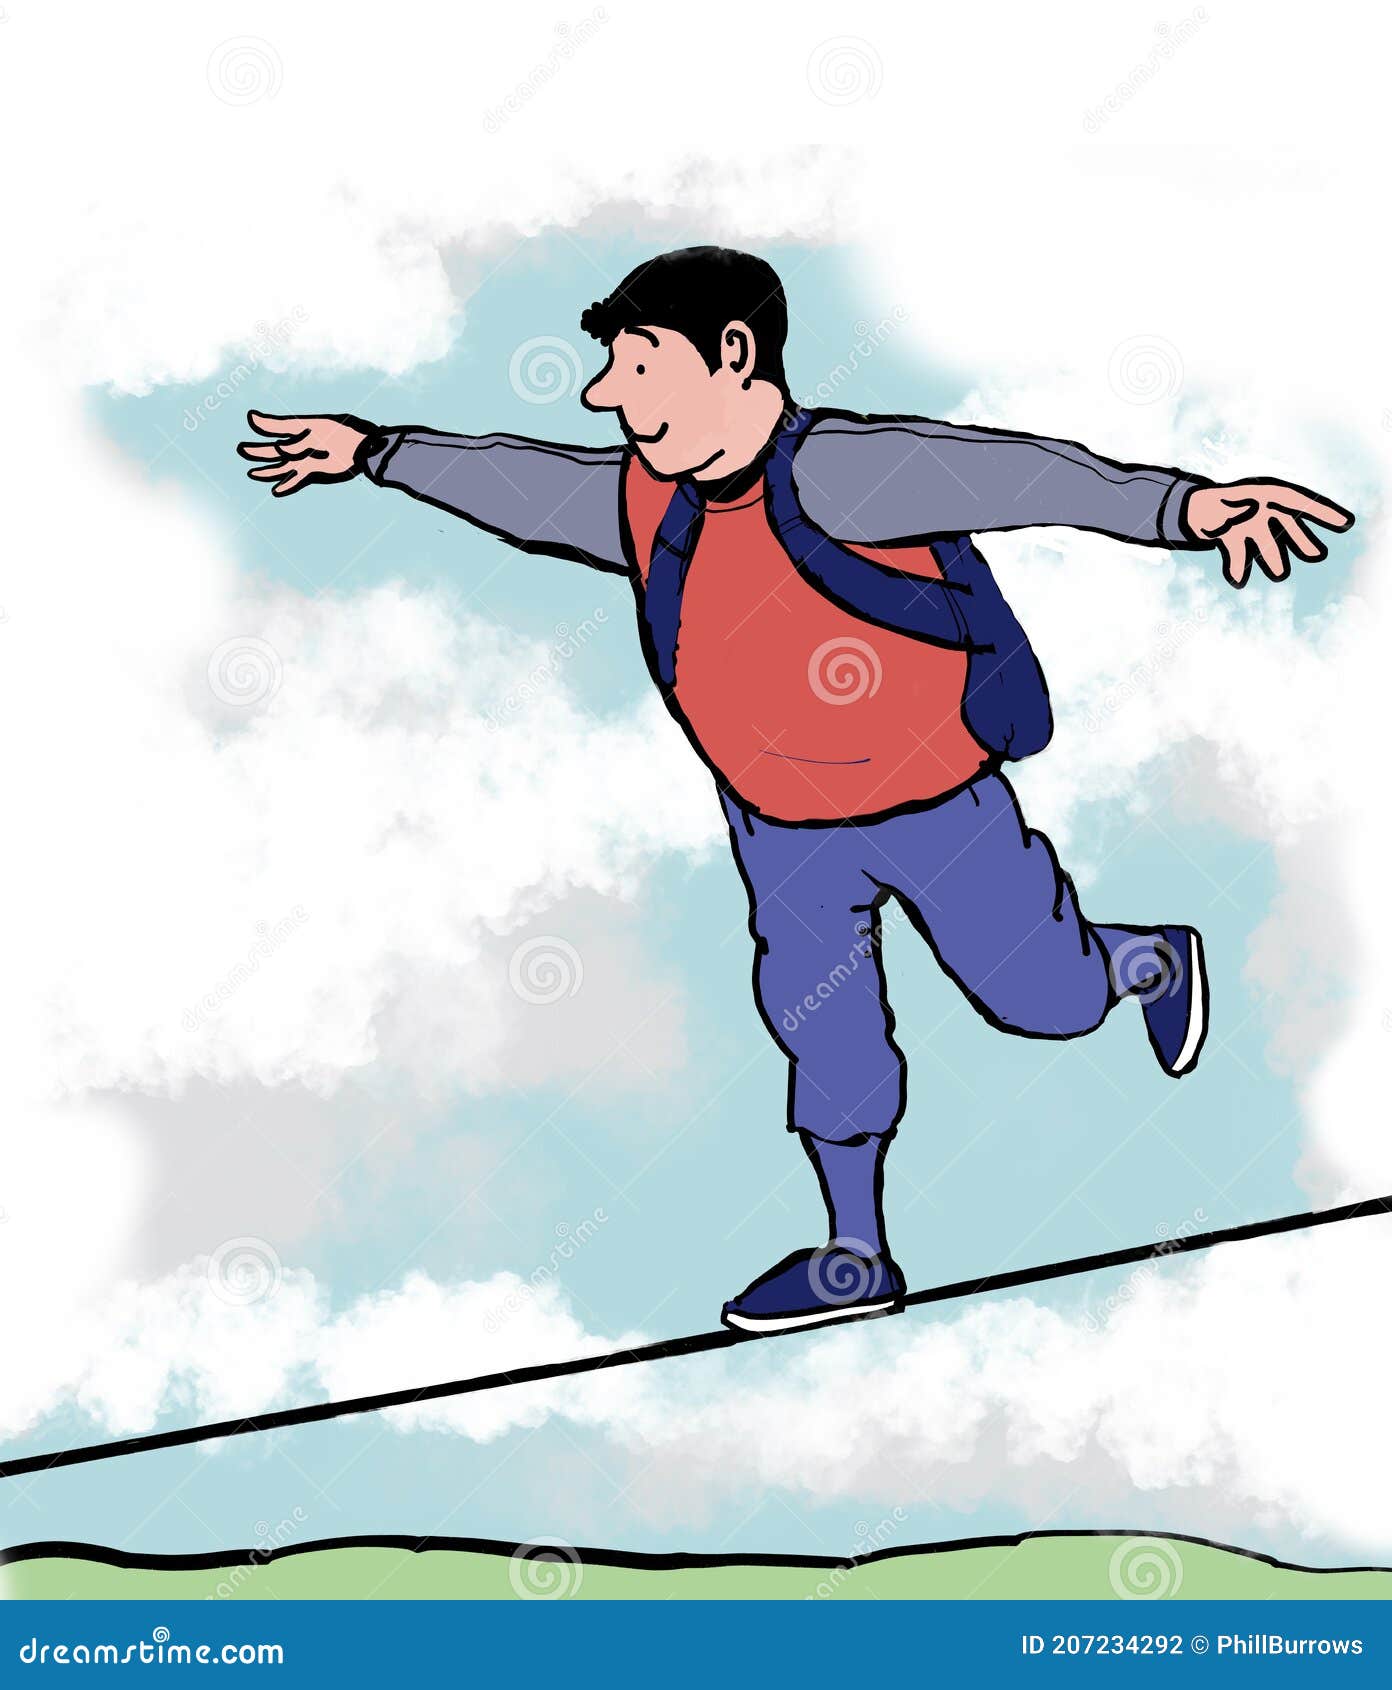 https://thumbs.dreamstime.com/z/tightrope-walker-cartoon-man-walking-tight-rope-high-up-outside-balancing-carefully-207234292.jpg